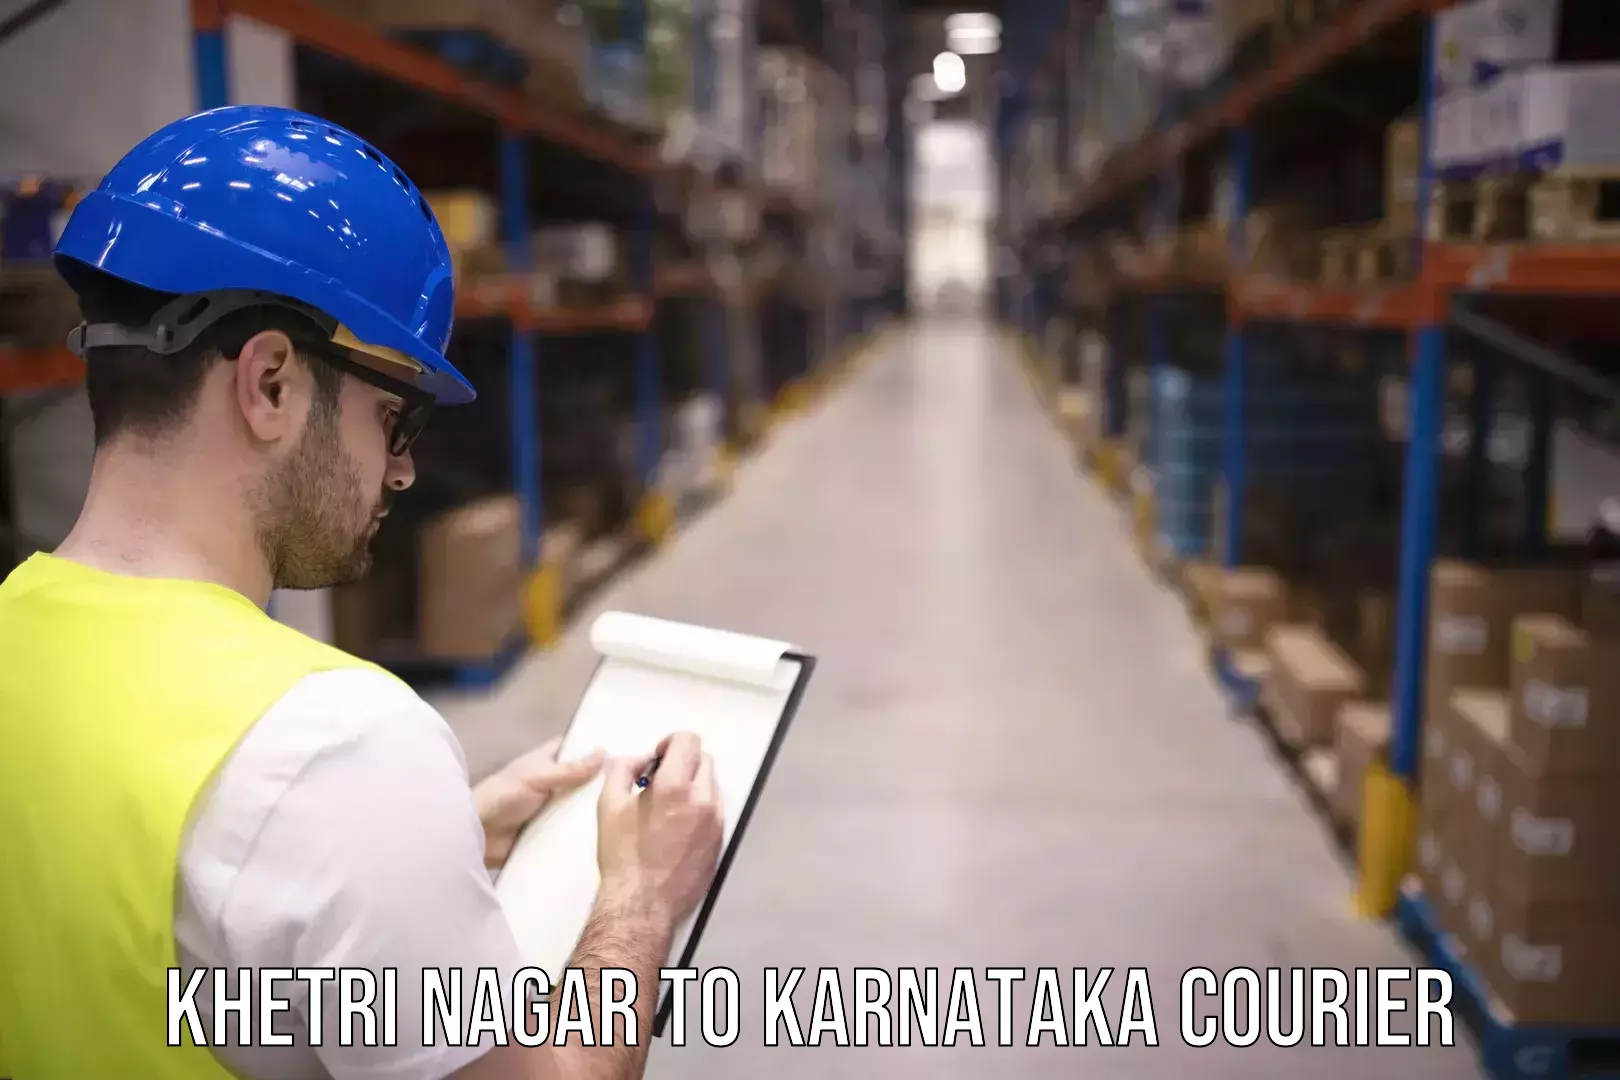 Professional courier handling Khetri Nagar to Karnataka